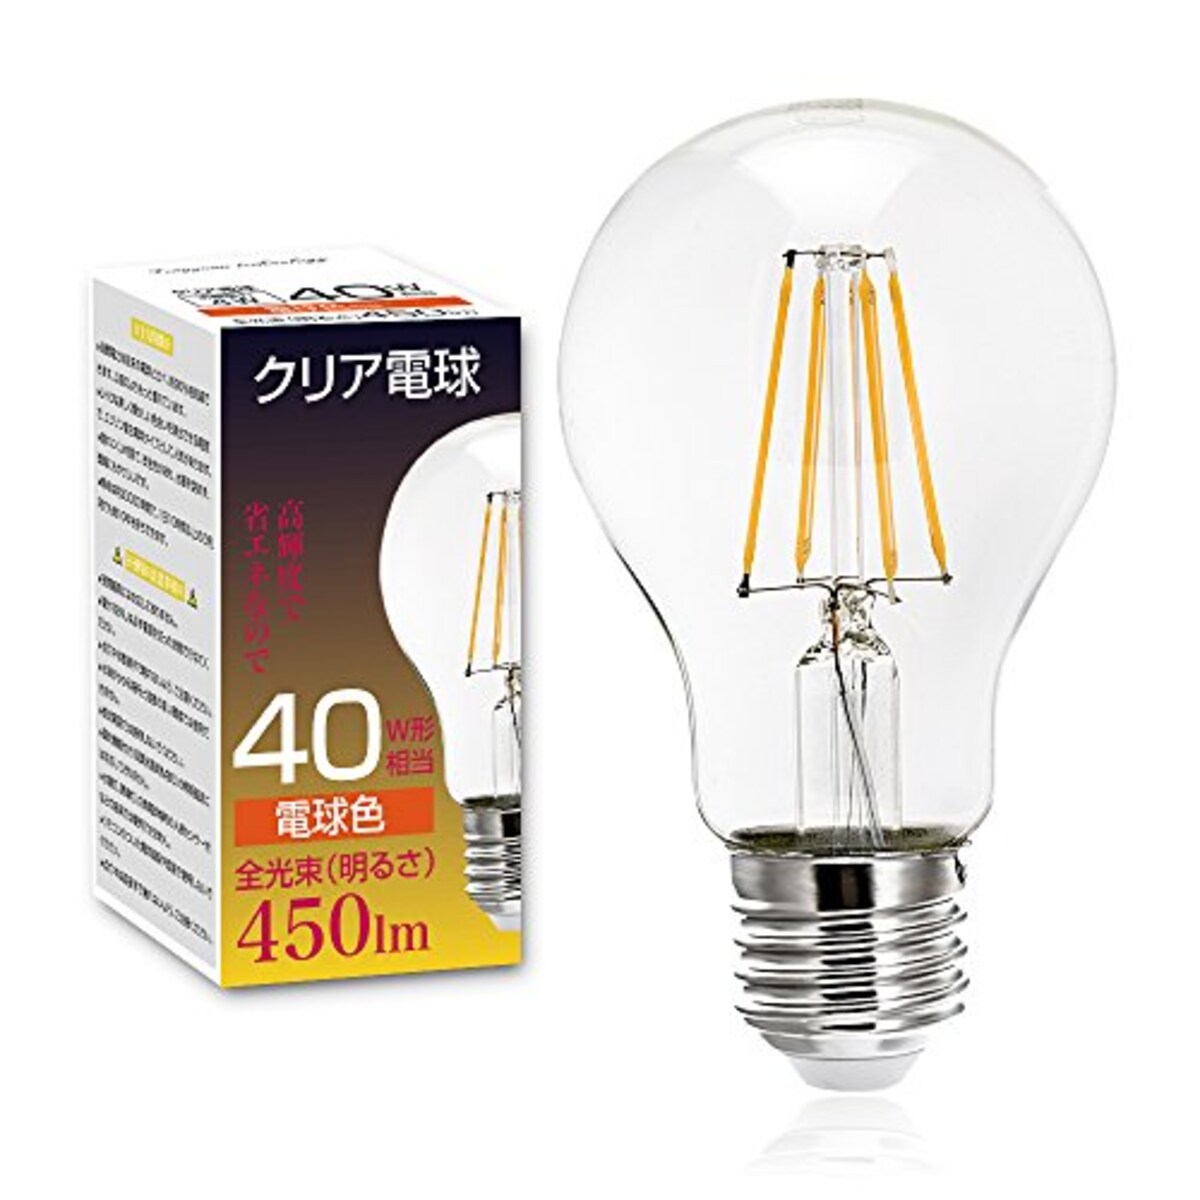 Tengyuan technology LEDクリア電球4W